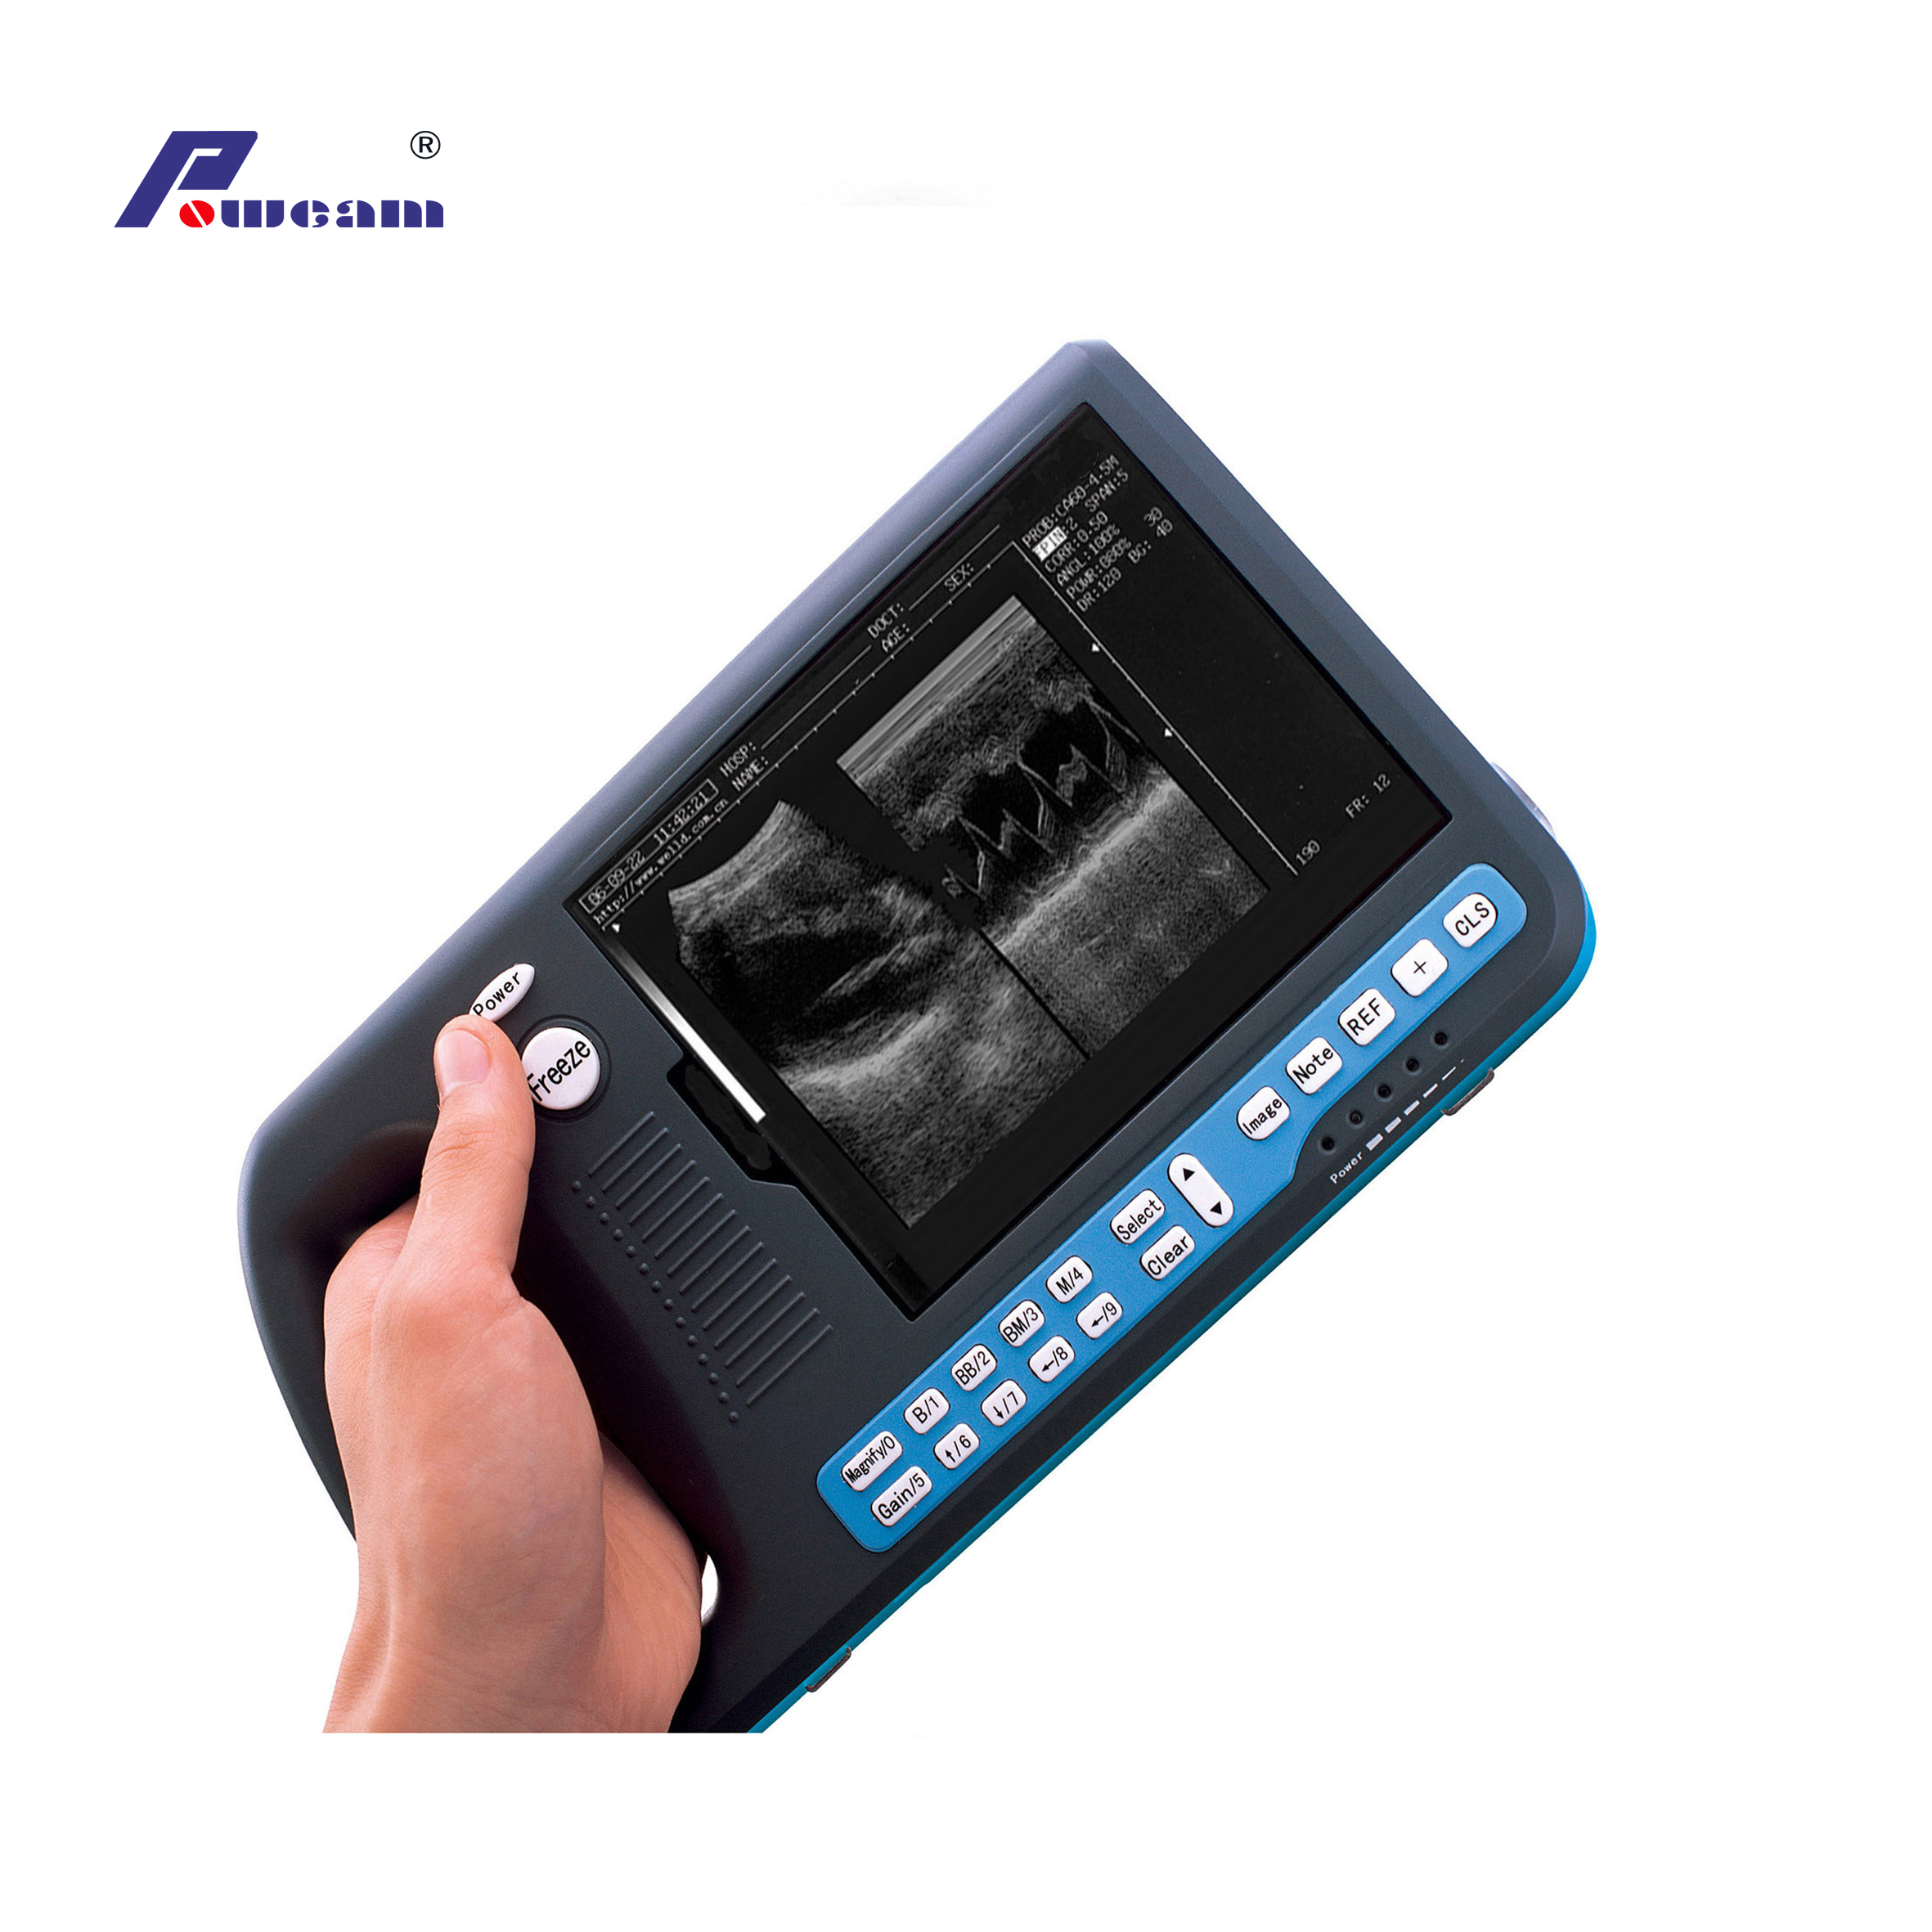 Digital-Palmtop-Ultraschallscanner (wwwb3000)